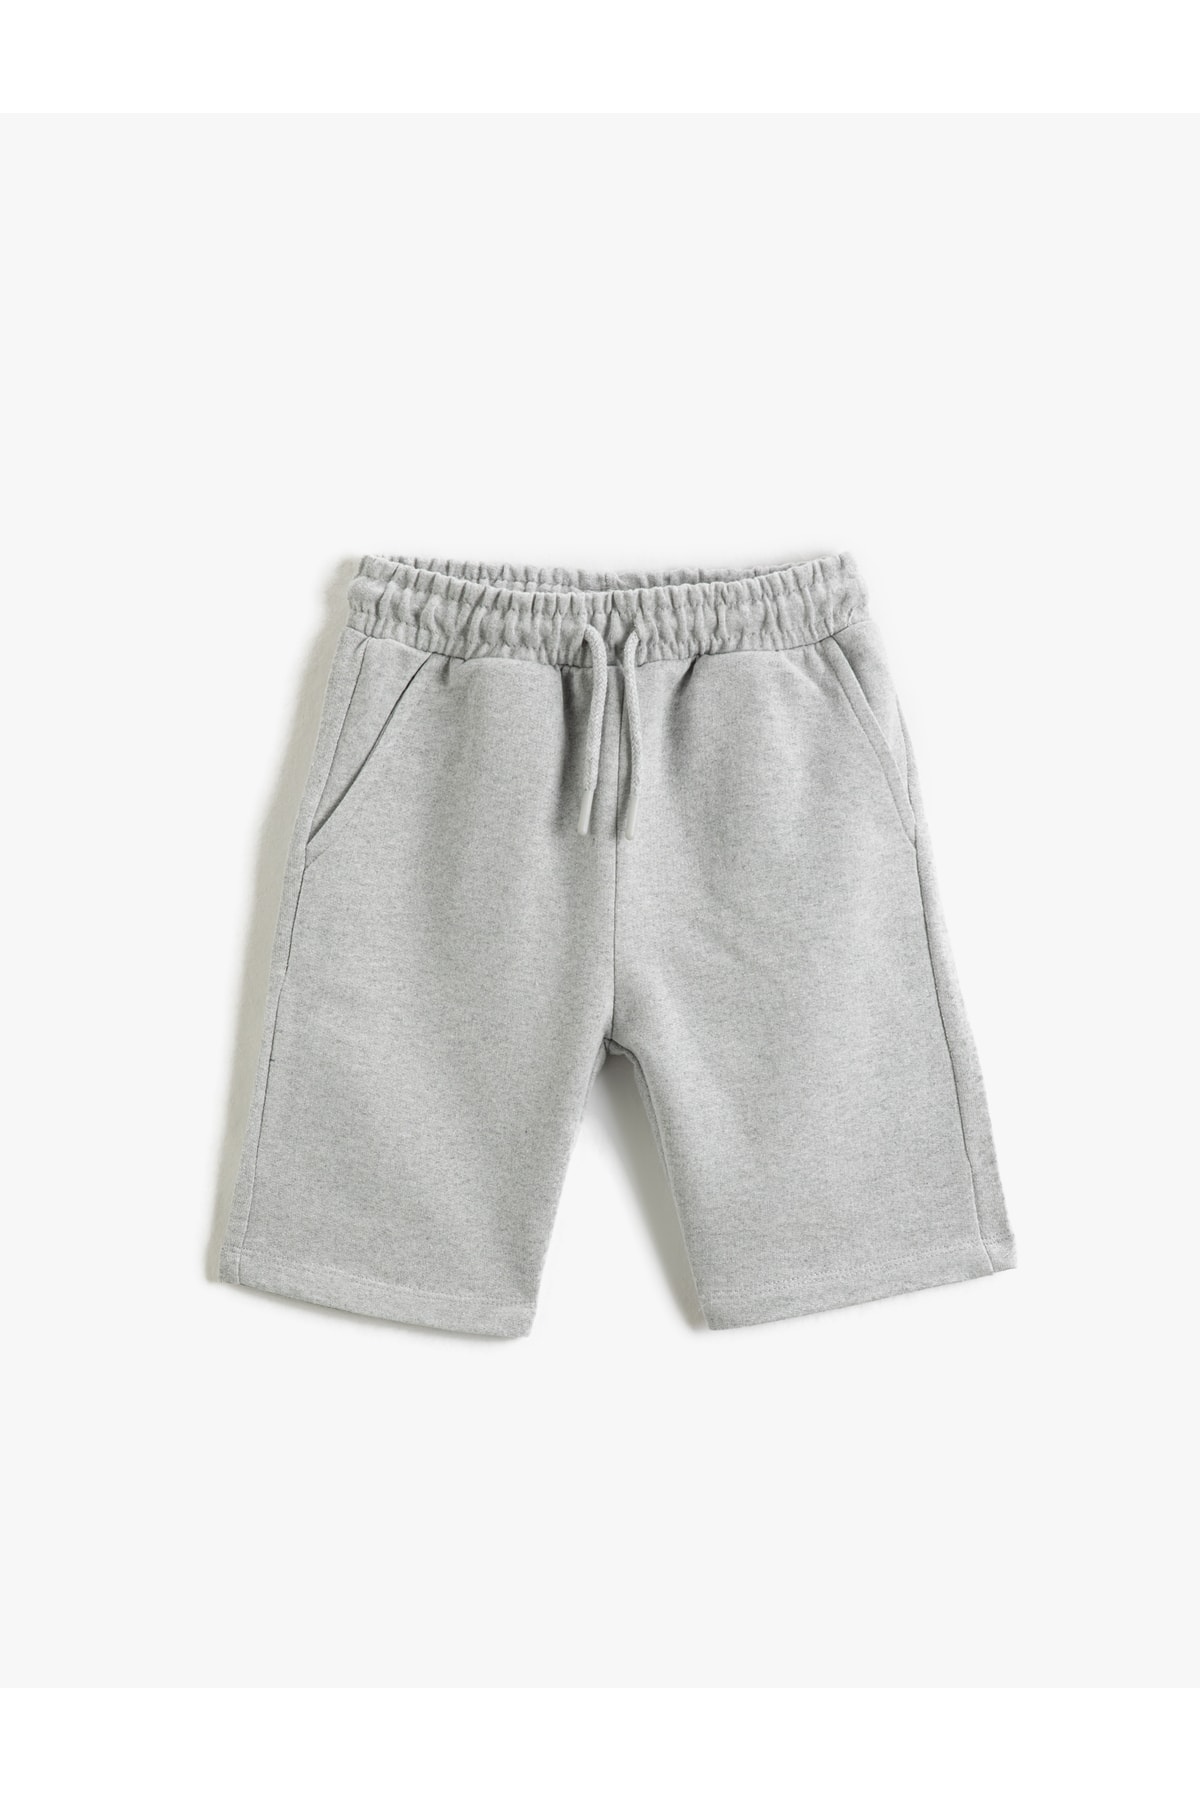 Koton Basic Chino Shorts with Tie Waist, Pockets